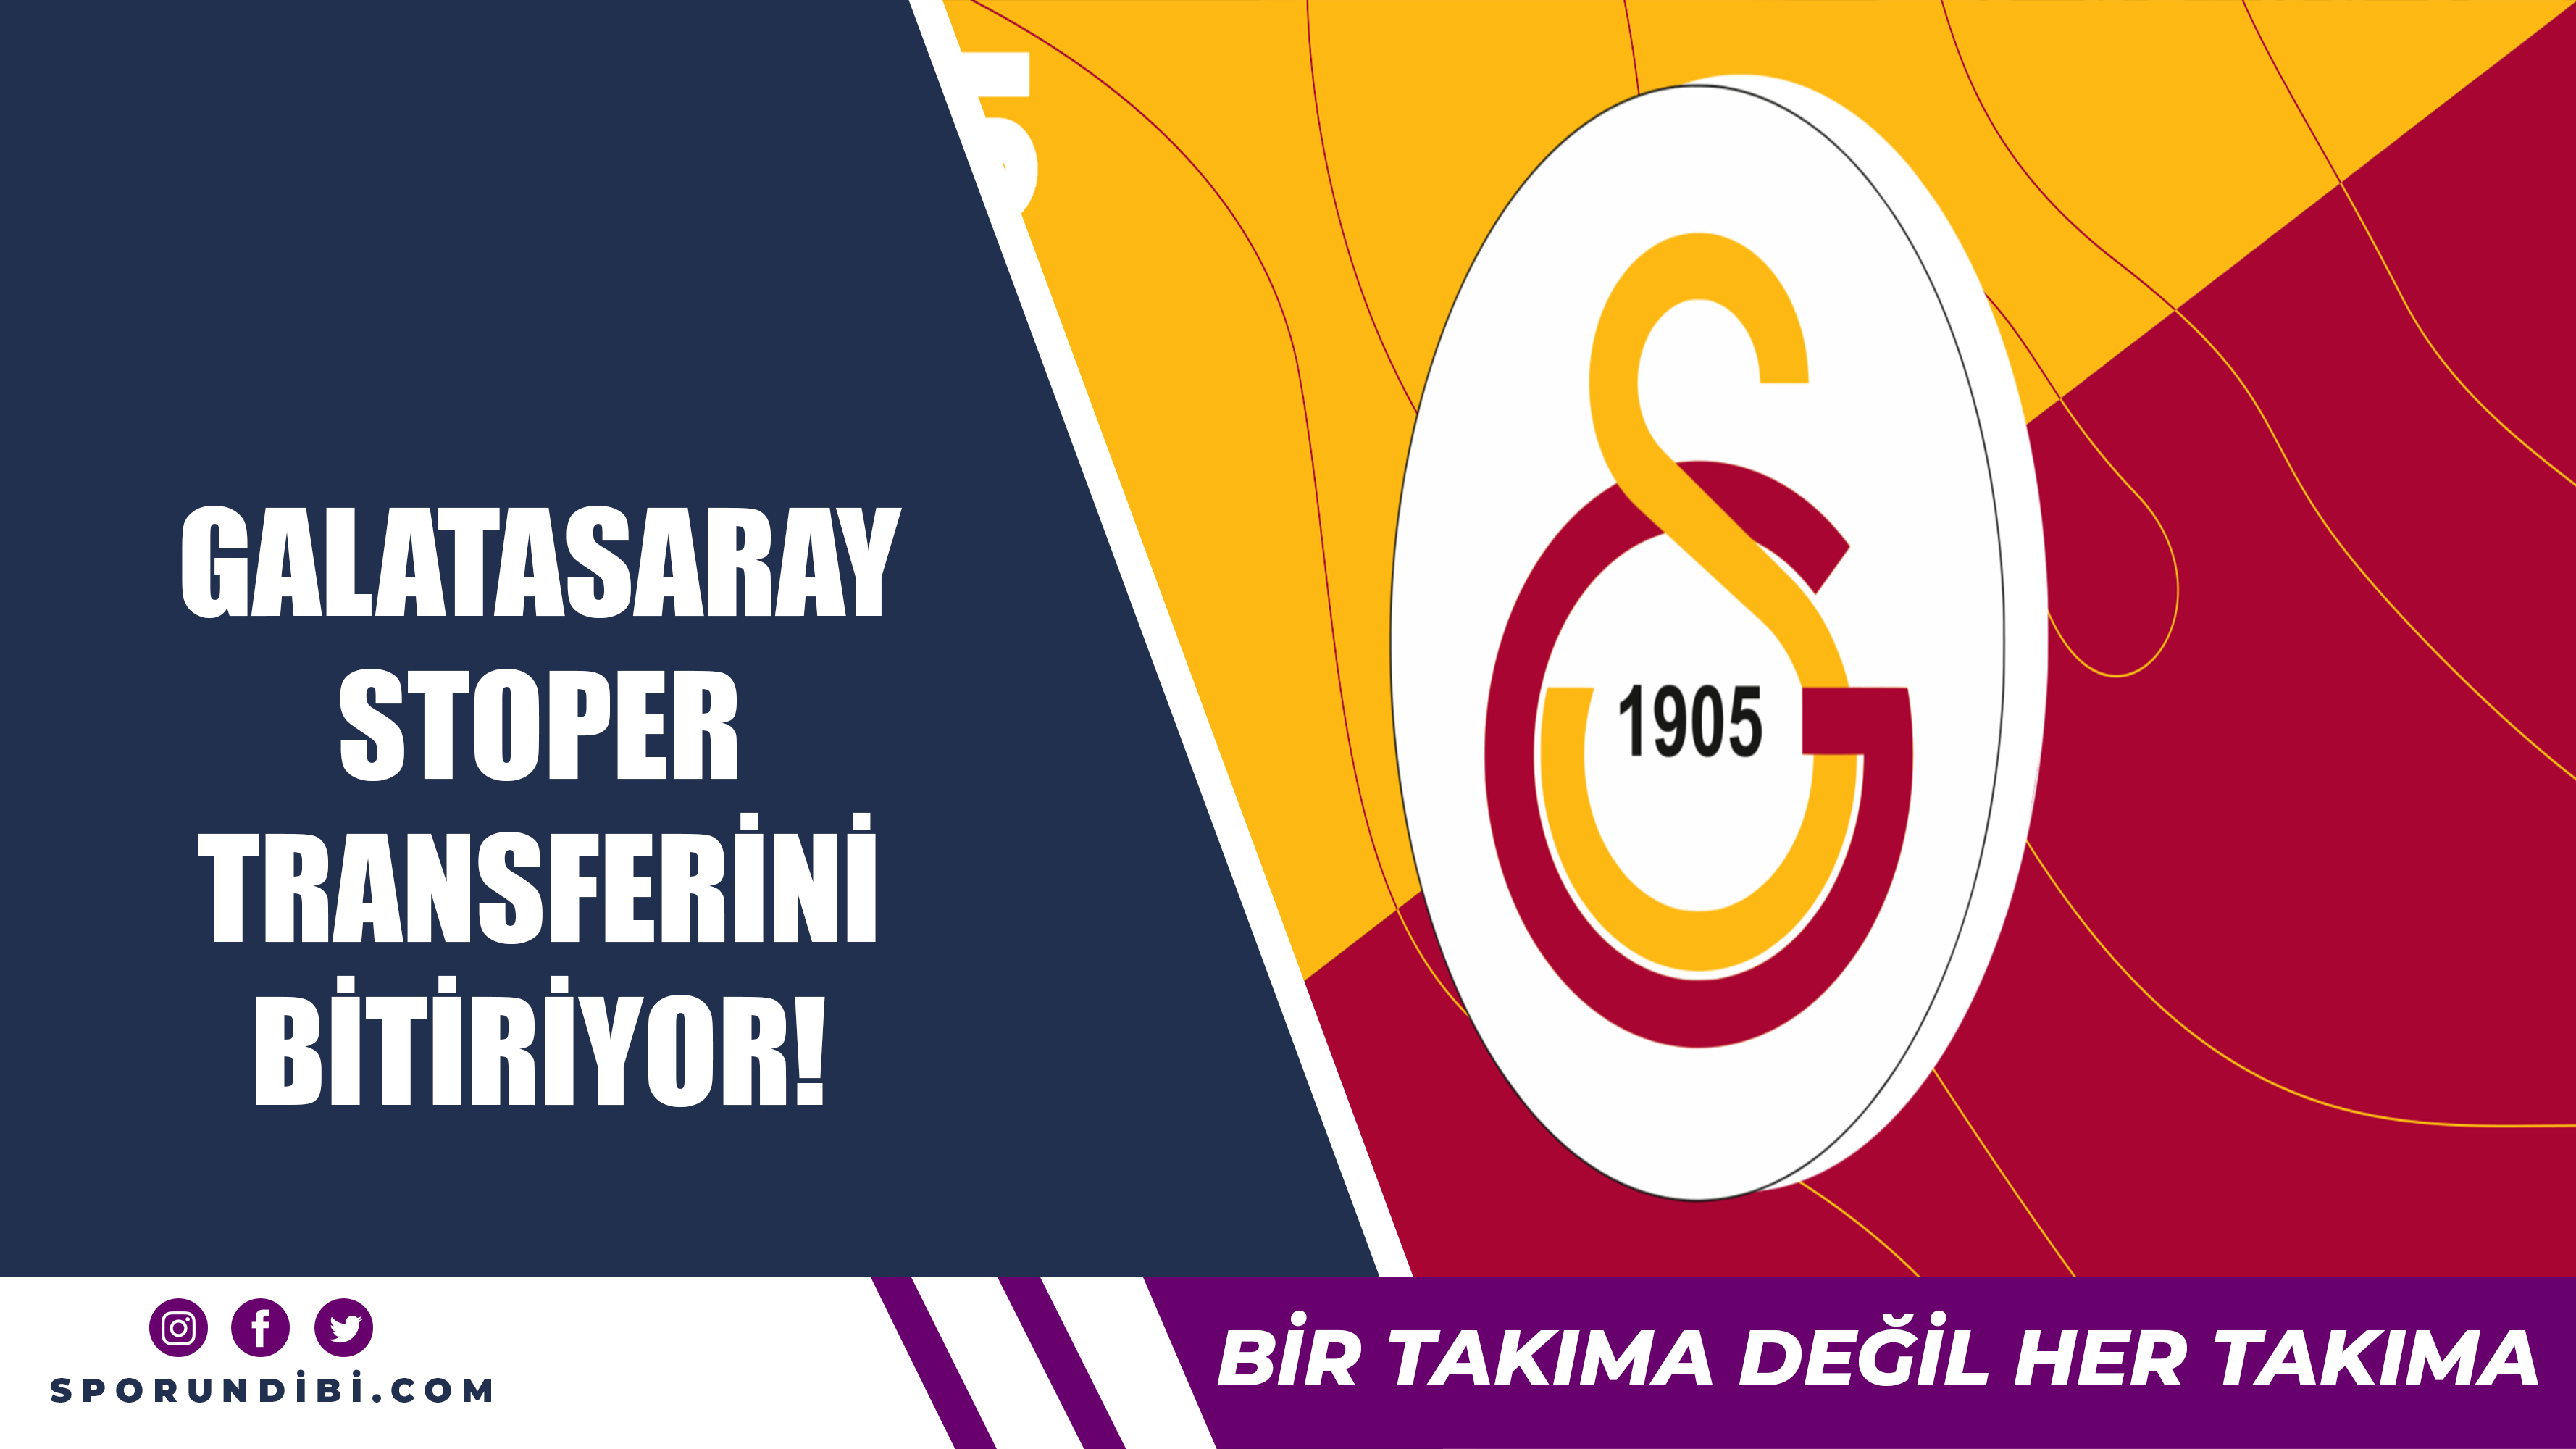 Galatasaray stoper transferini bitiriyor!